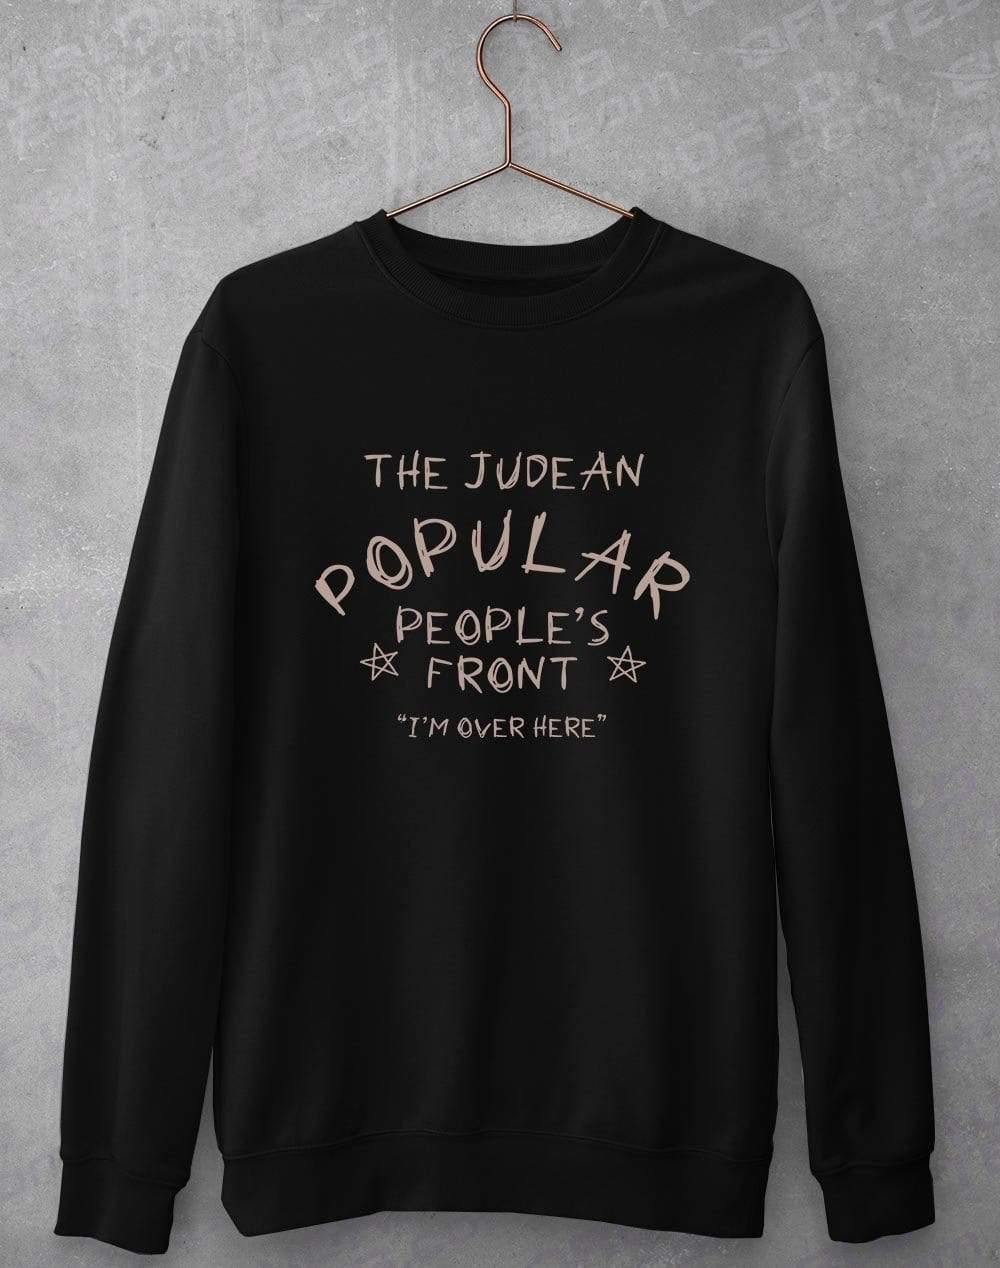 Judean Pupular Peoples Front Sweatshirt S / Black  - Off World Tees